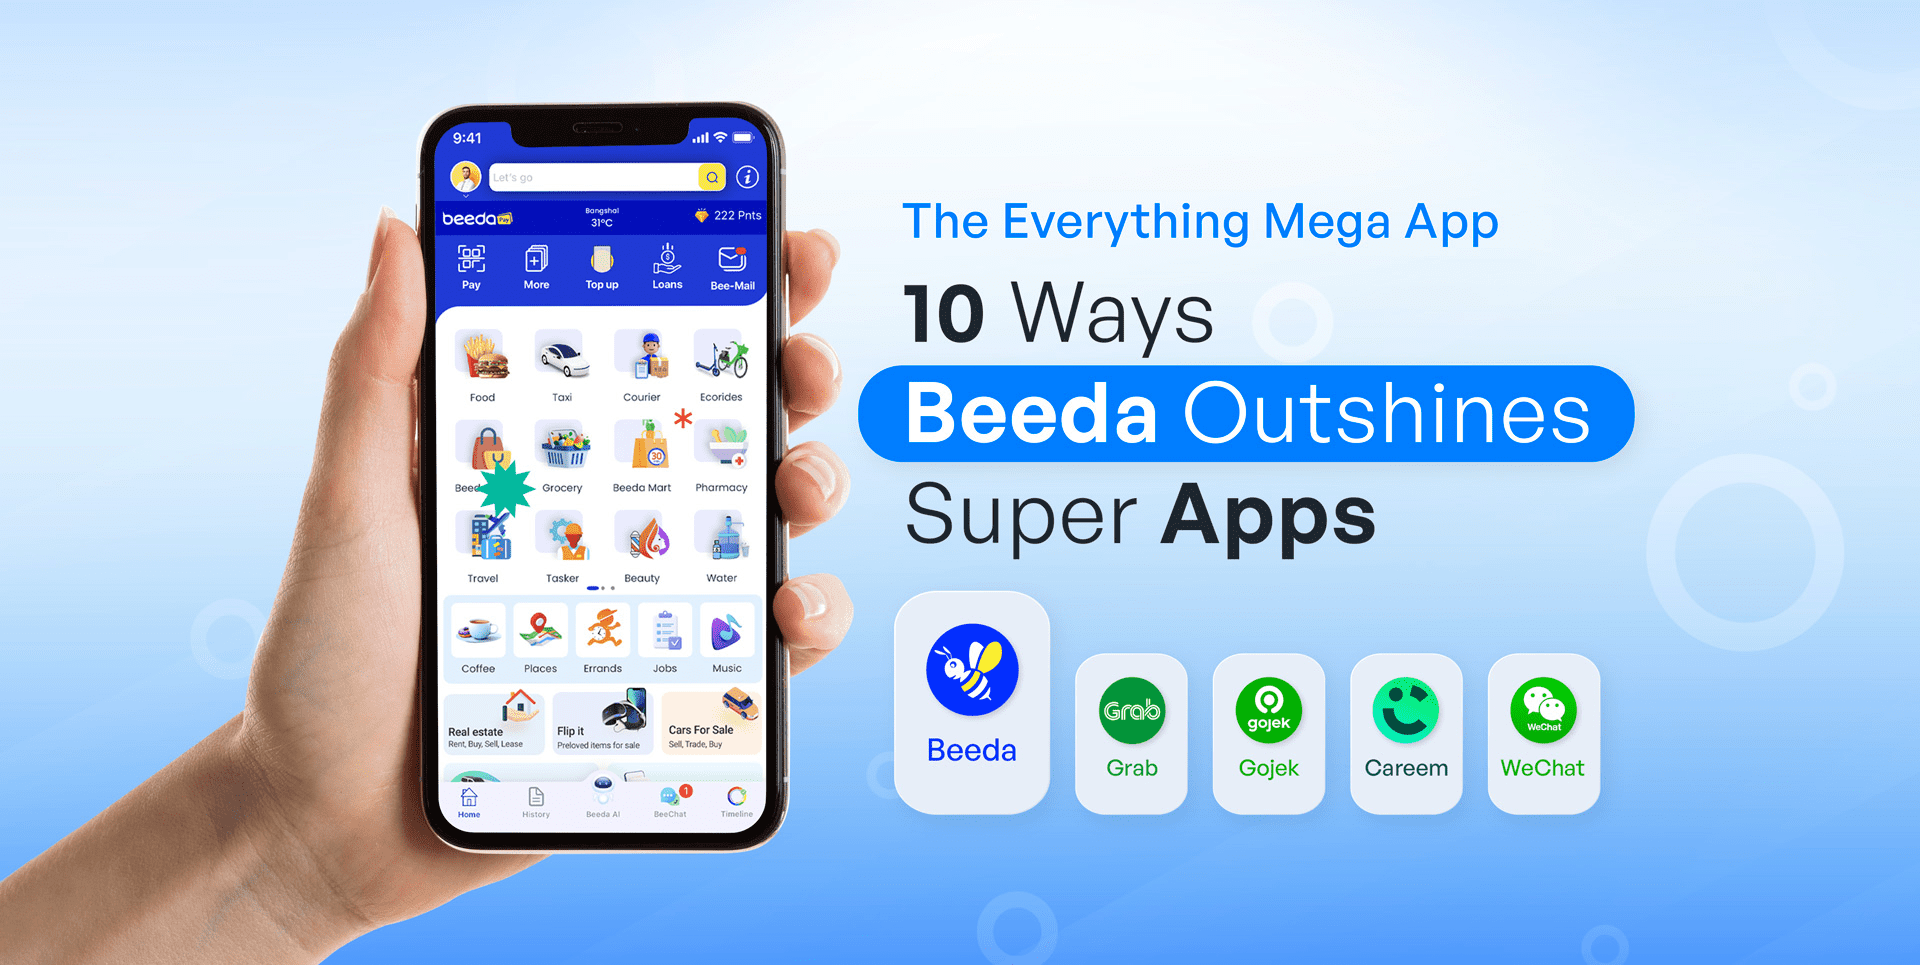 The Everything Mega App